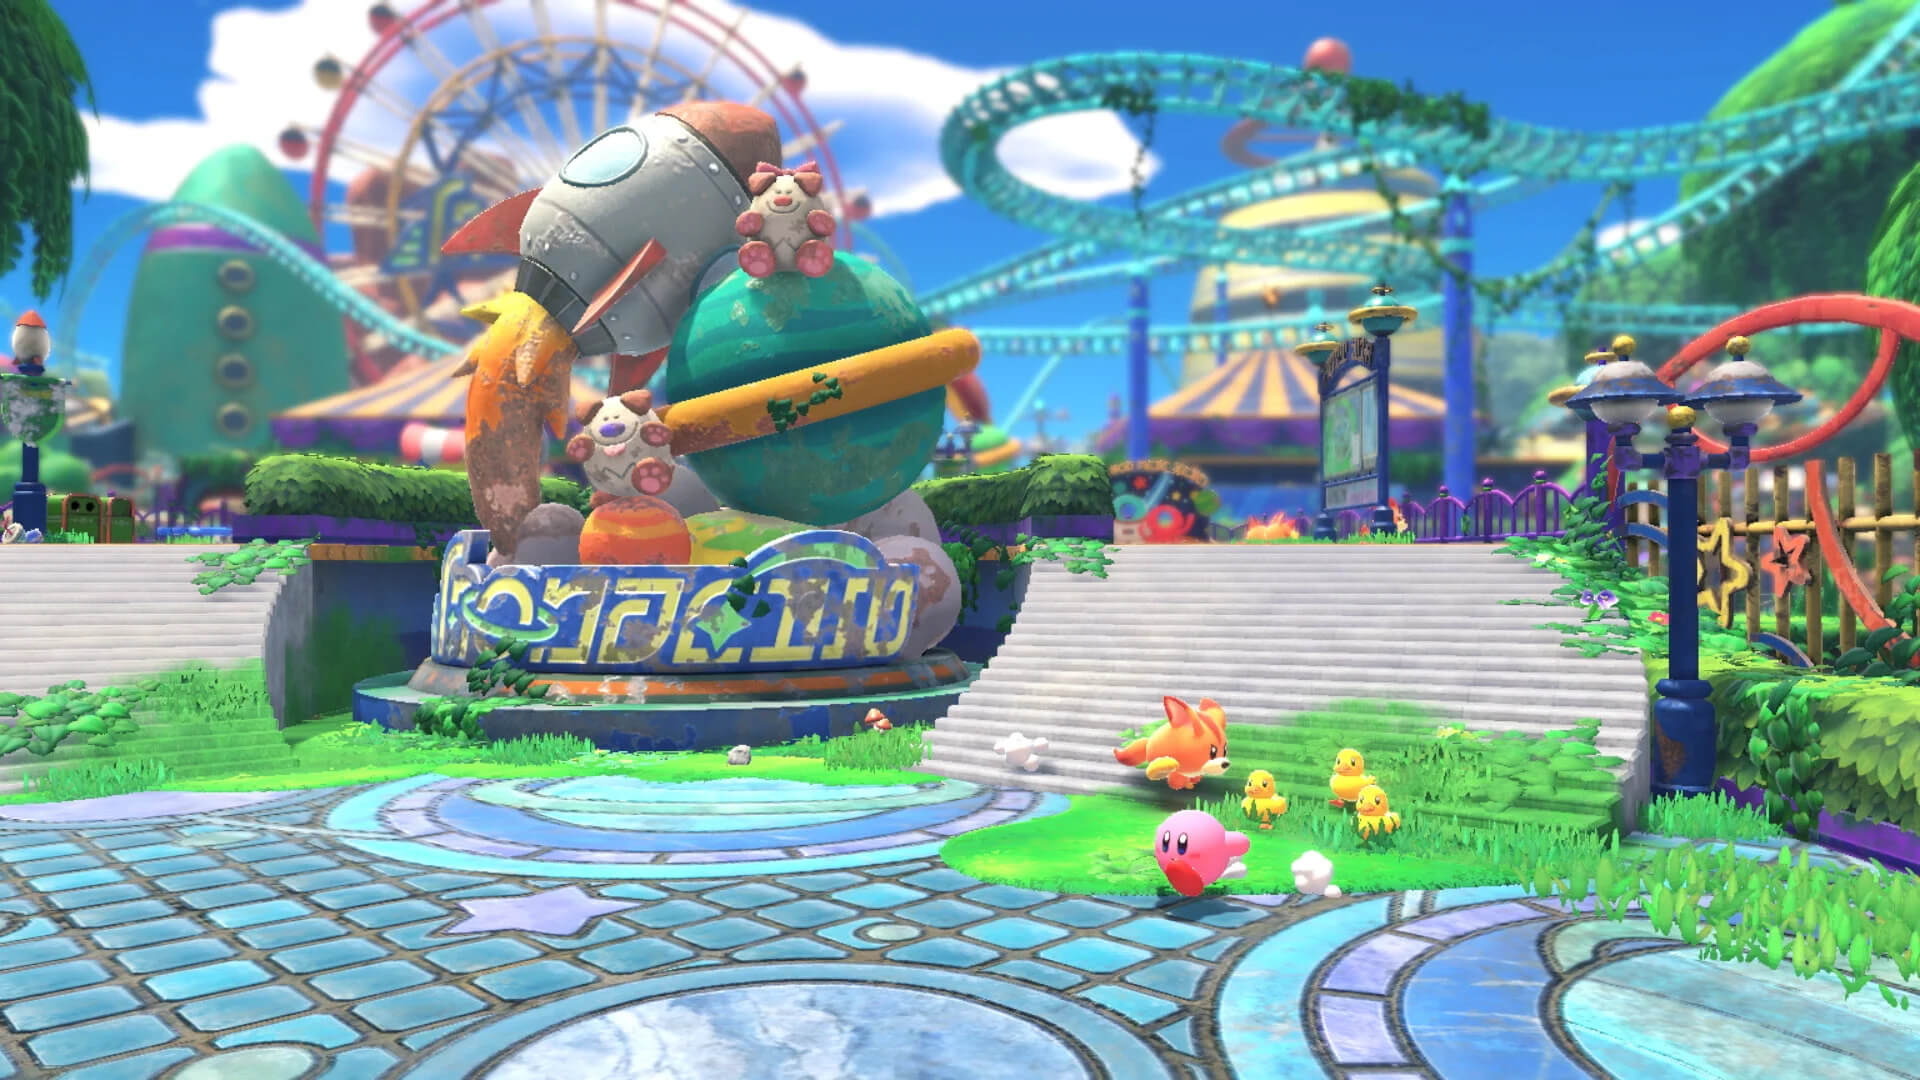 Kirby on a space-themed amusement park